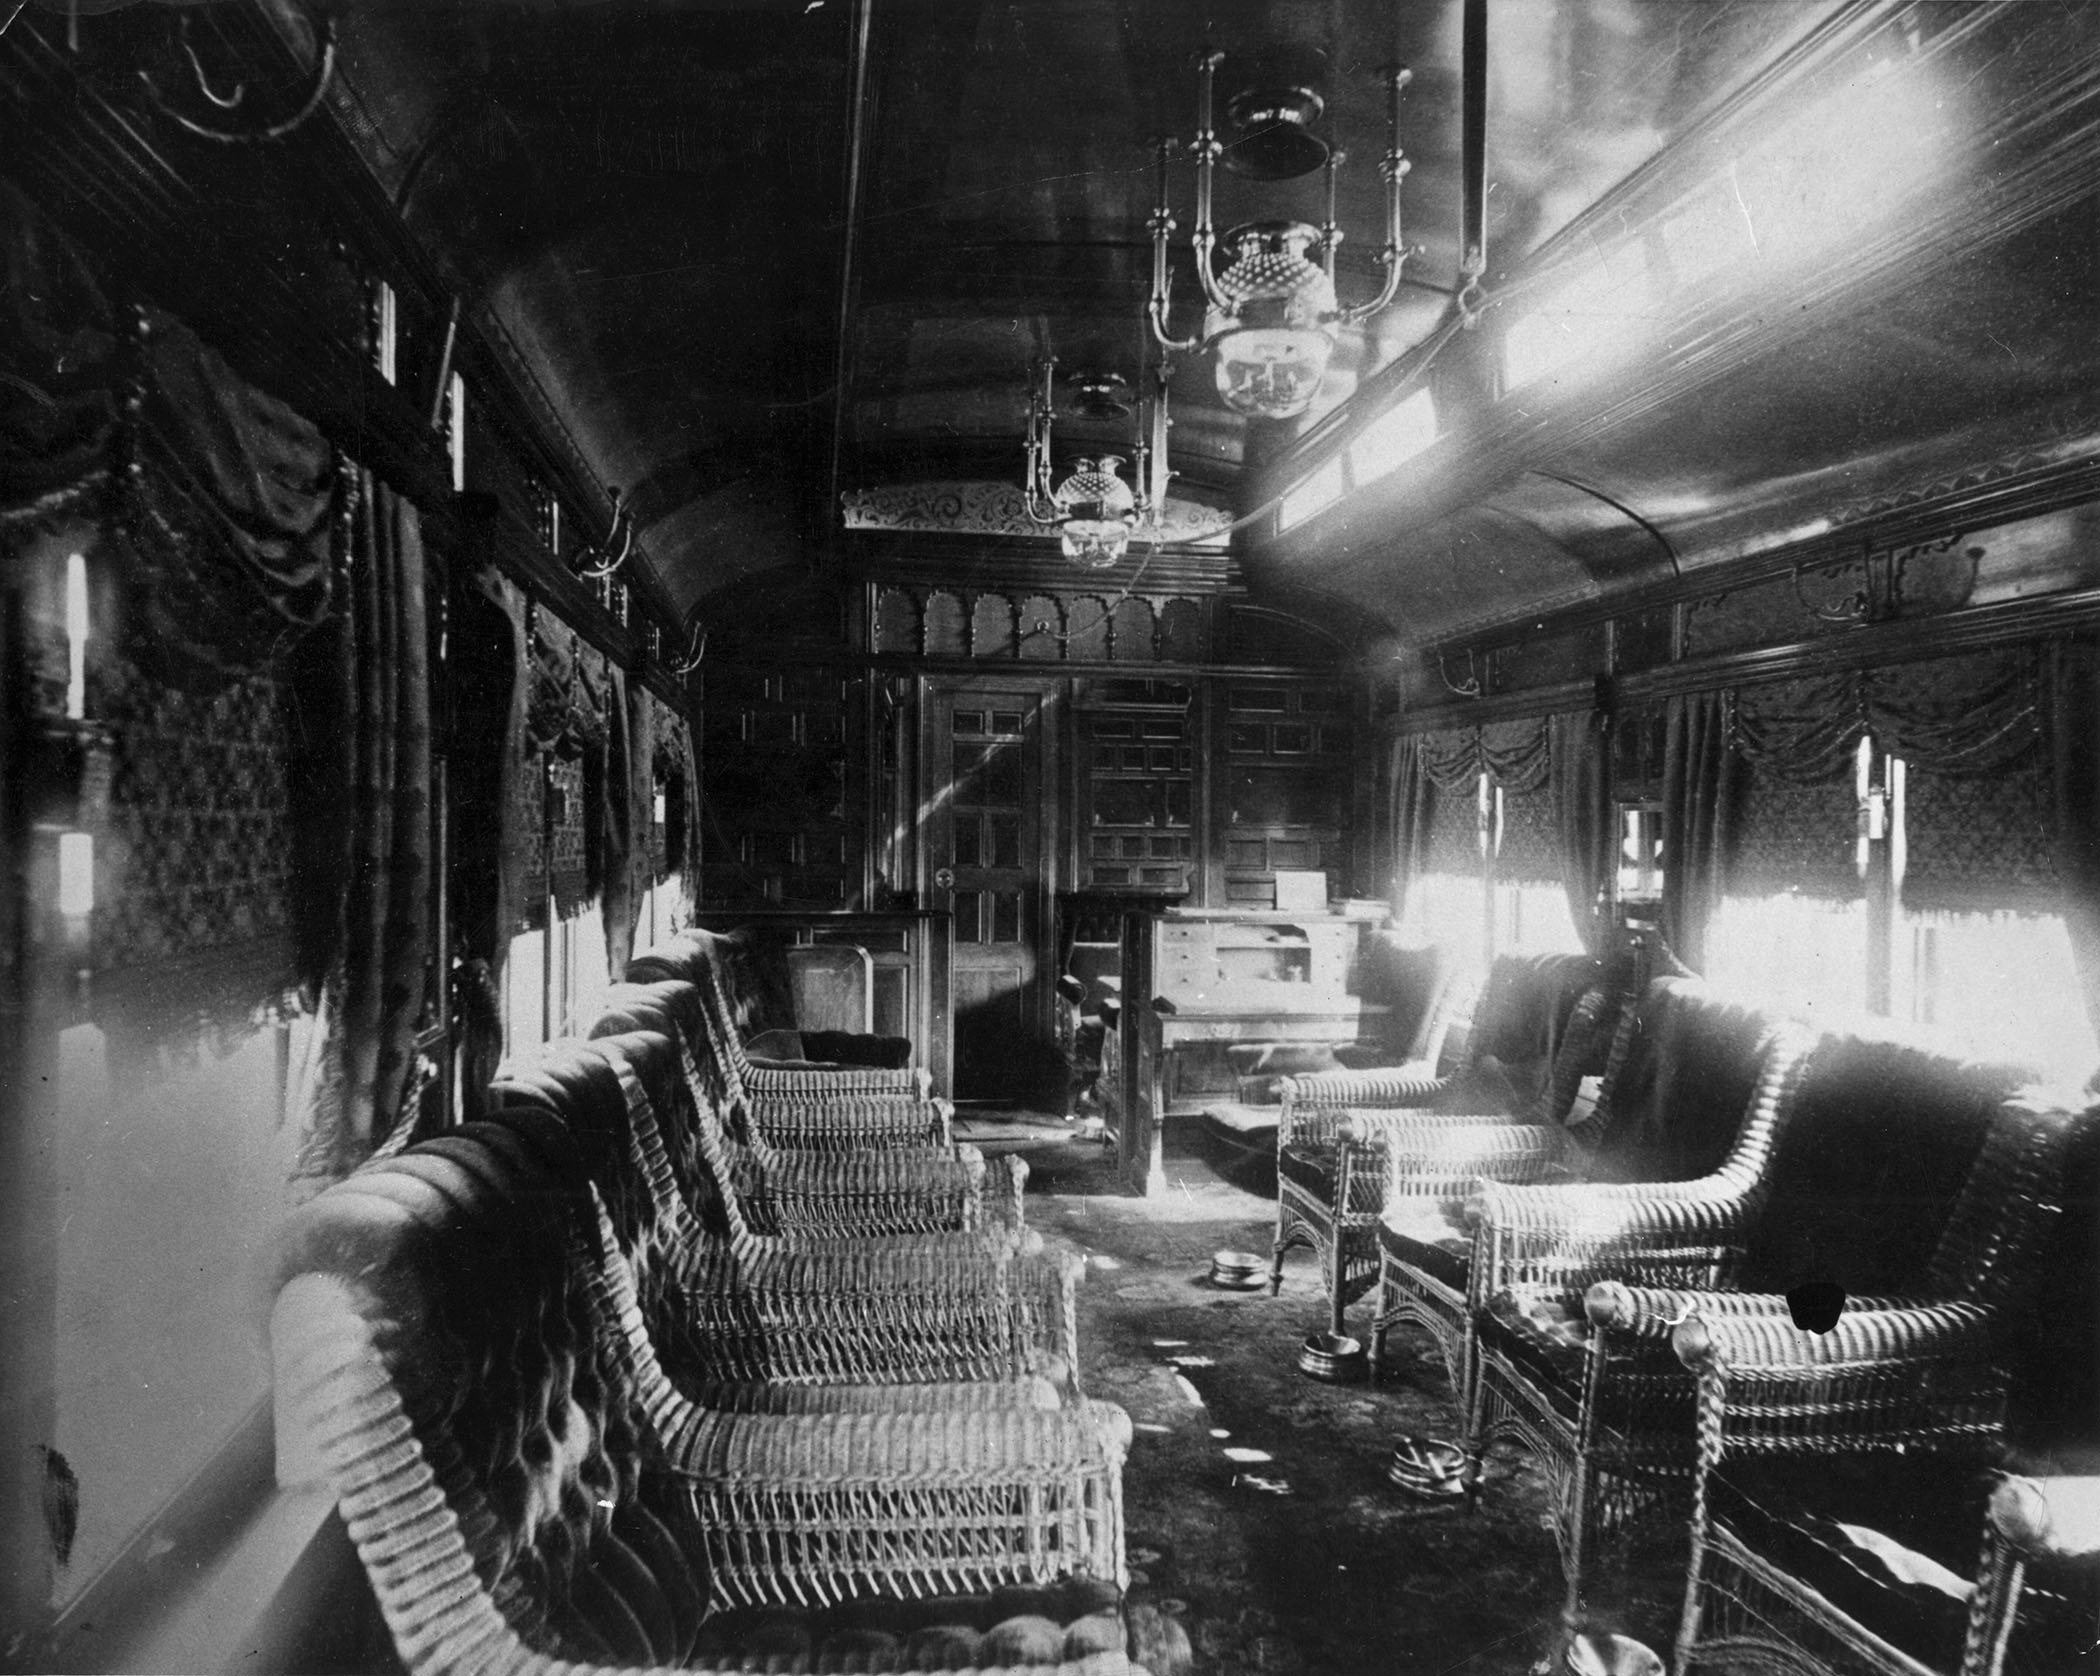 New York and New England Railroad White Train smoker car